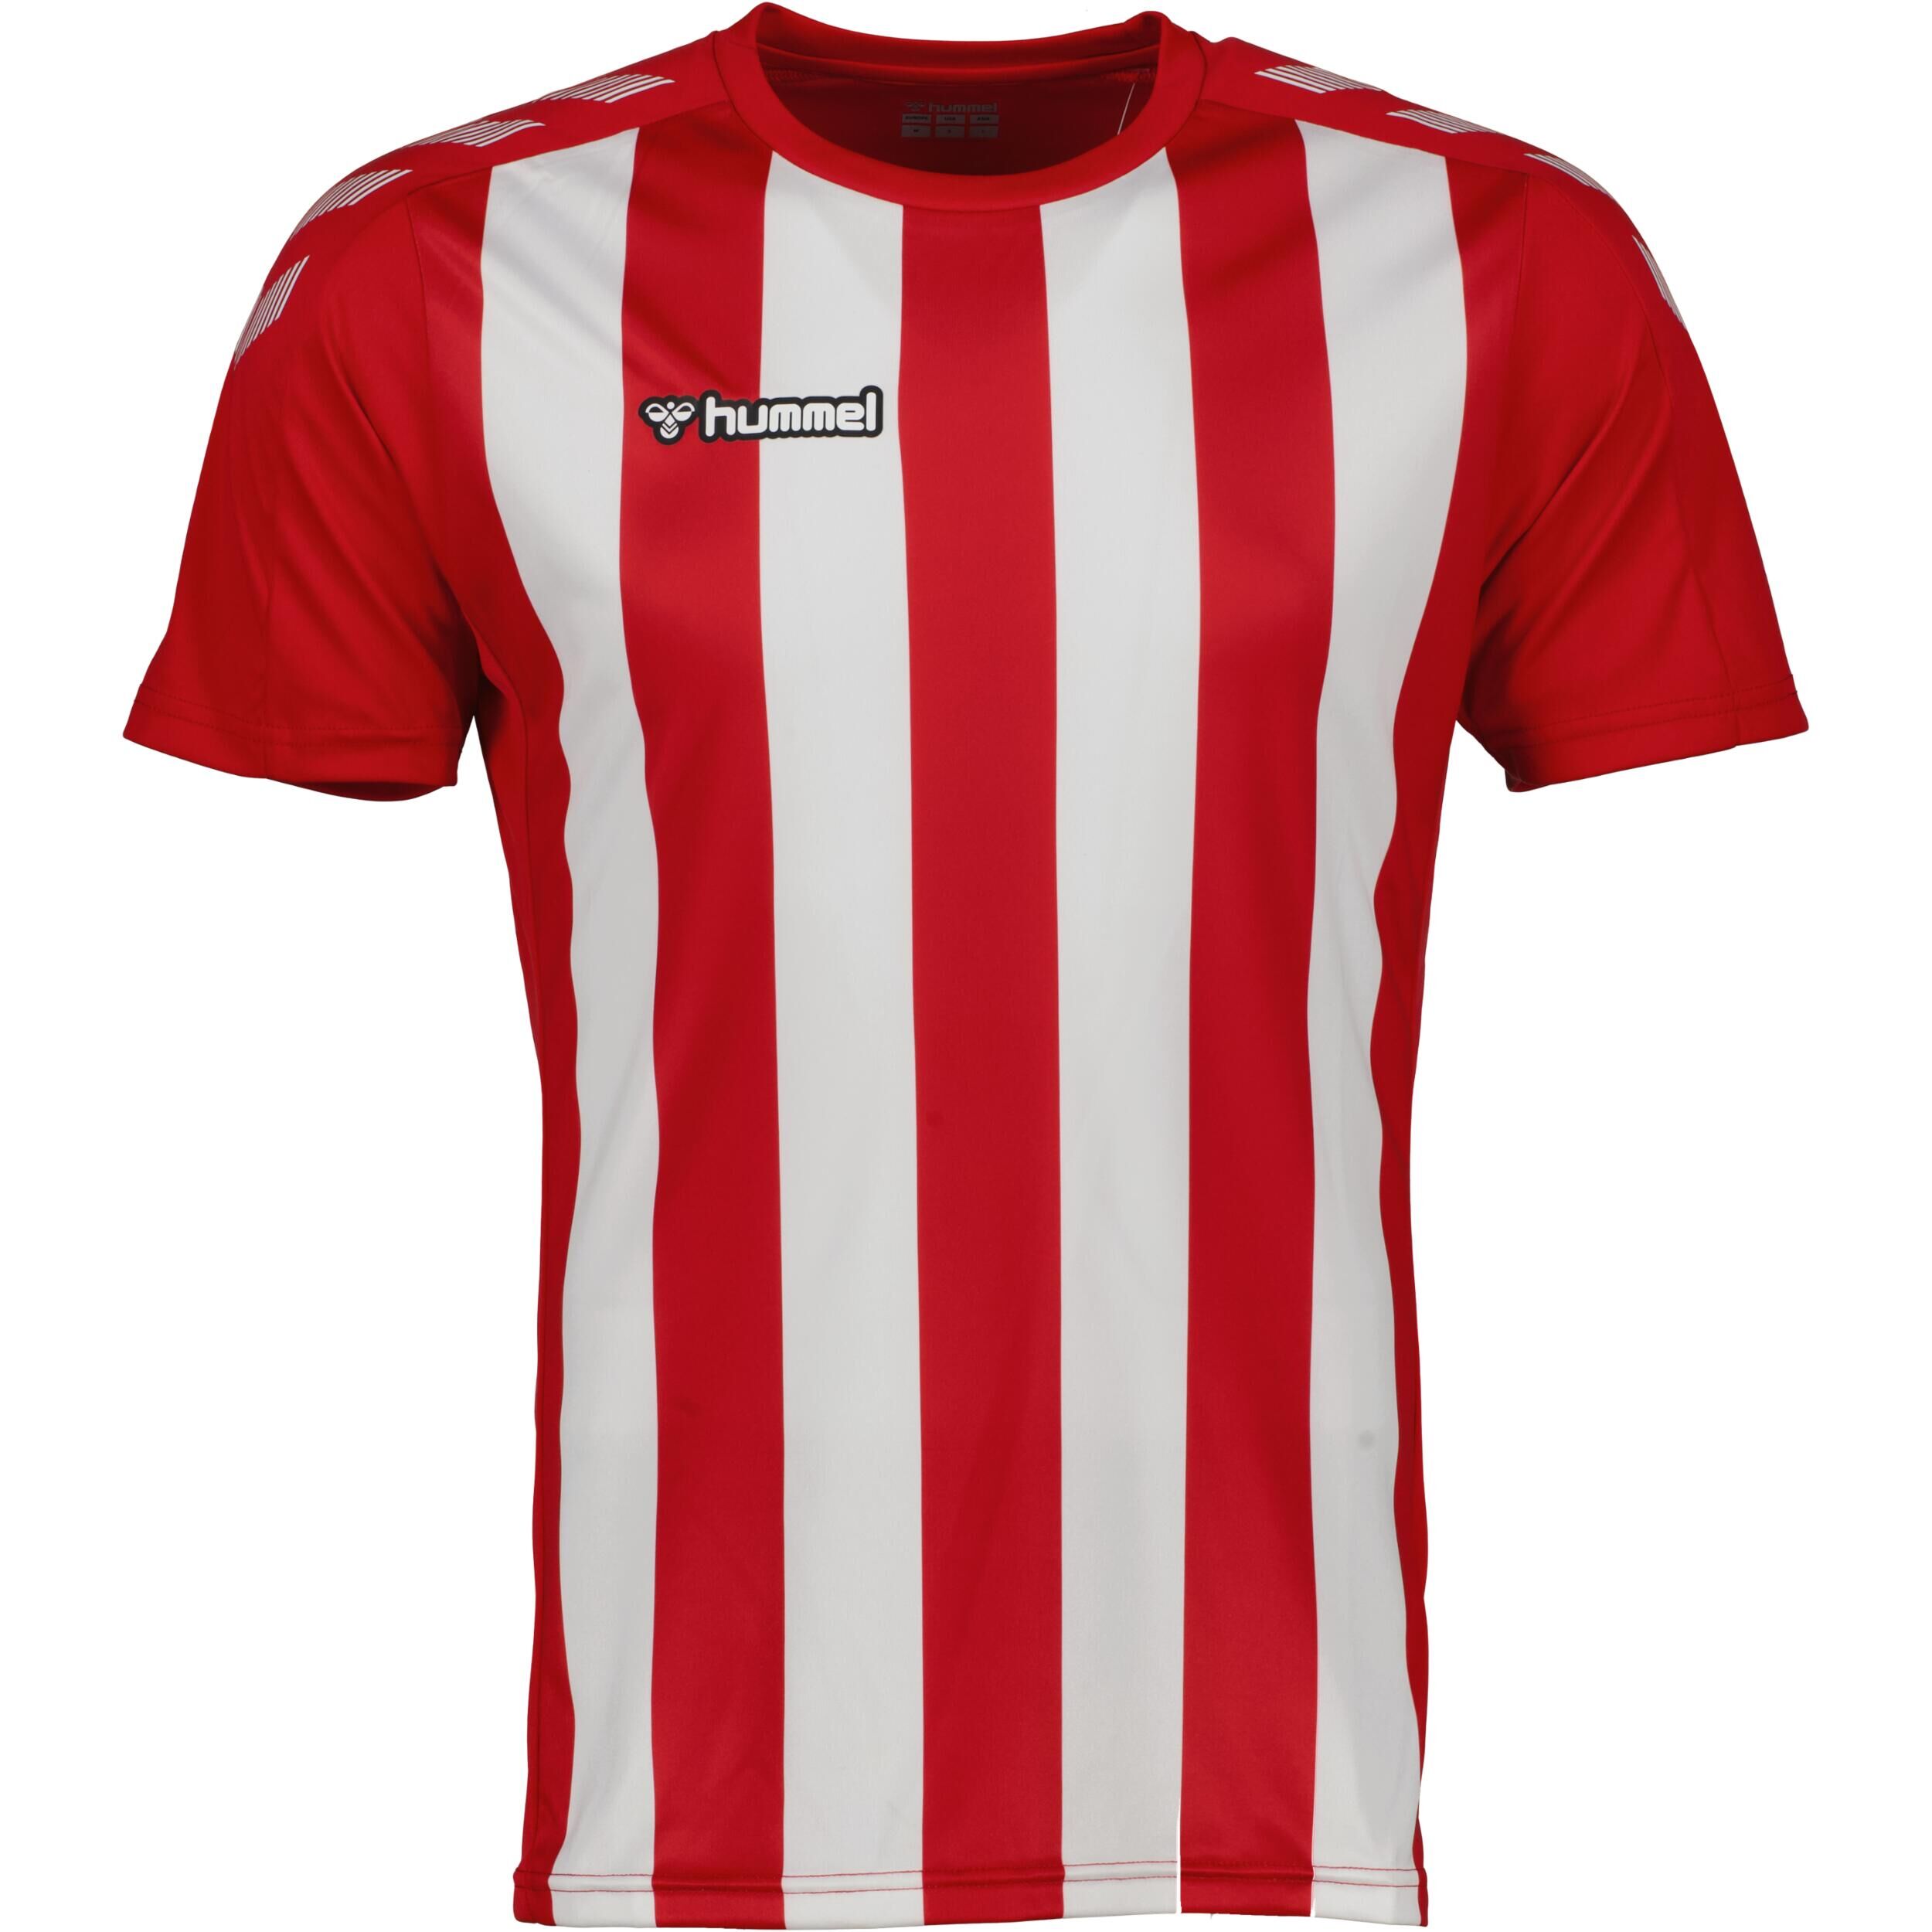 HUMMEL Stripe jersey for men, great for football, in true red/white